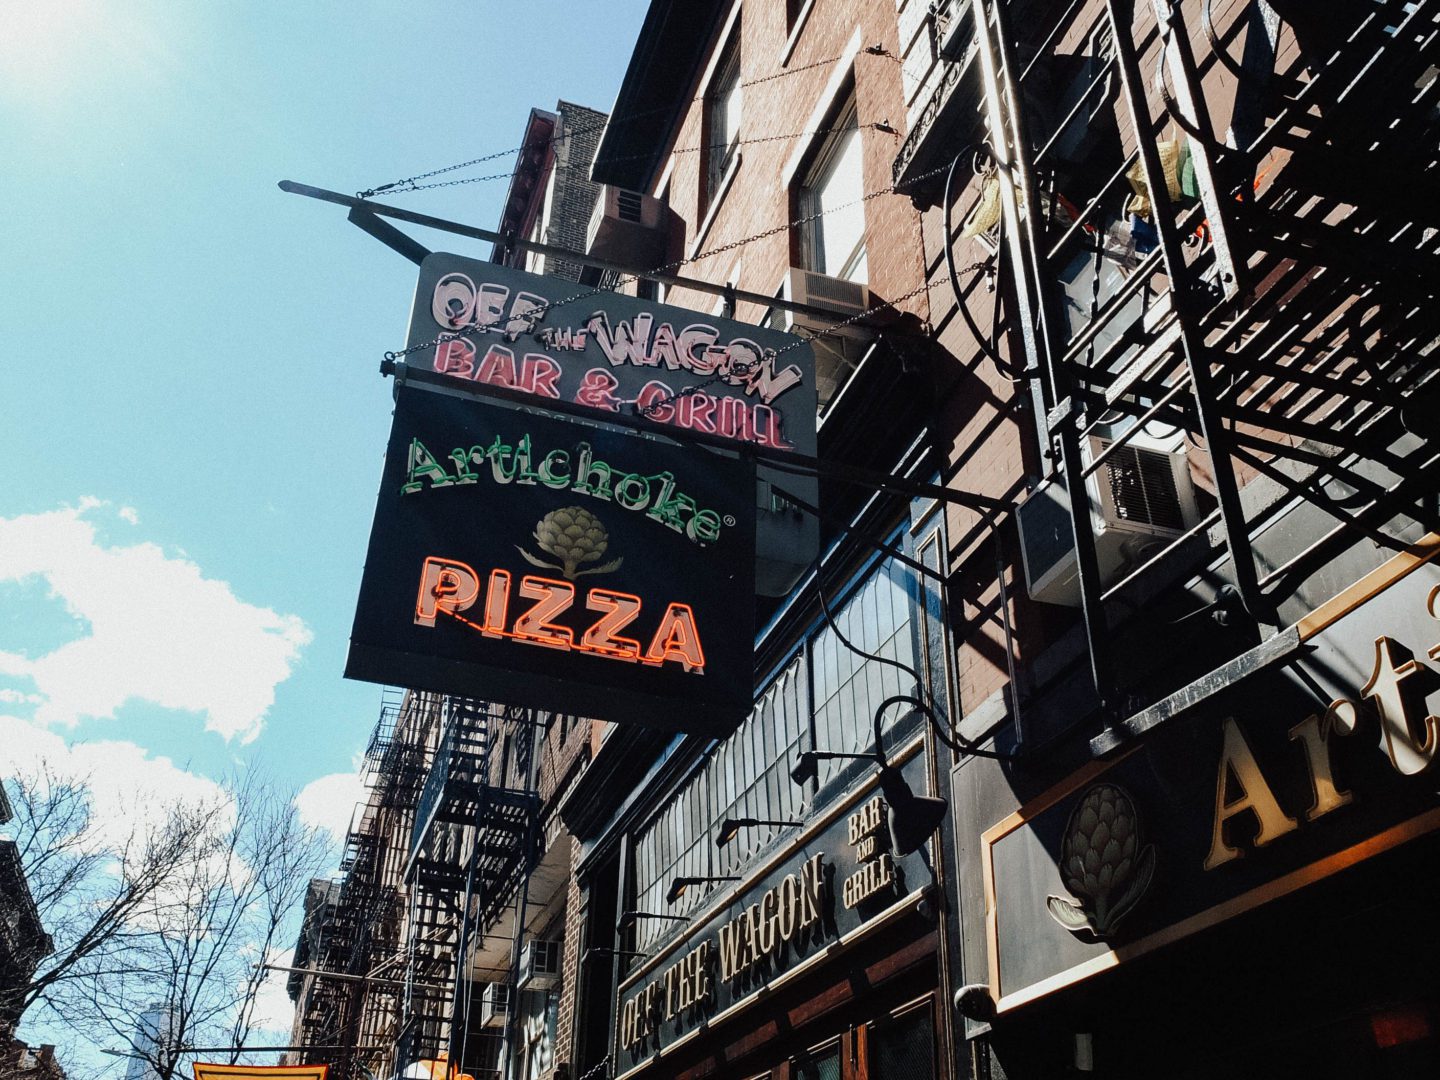 Artichoke pizza sign on a building 